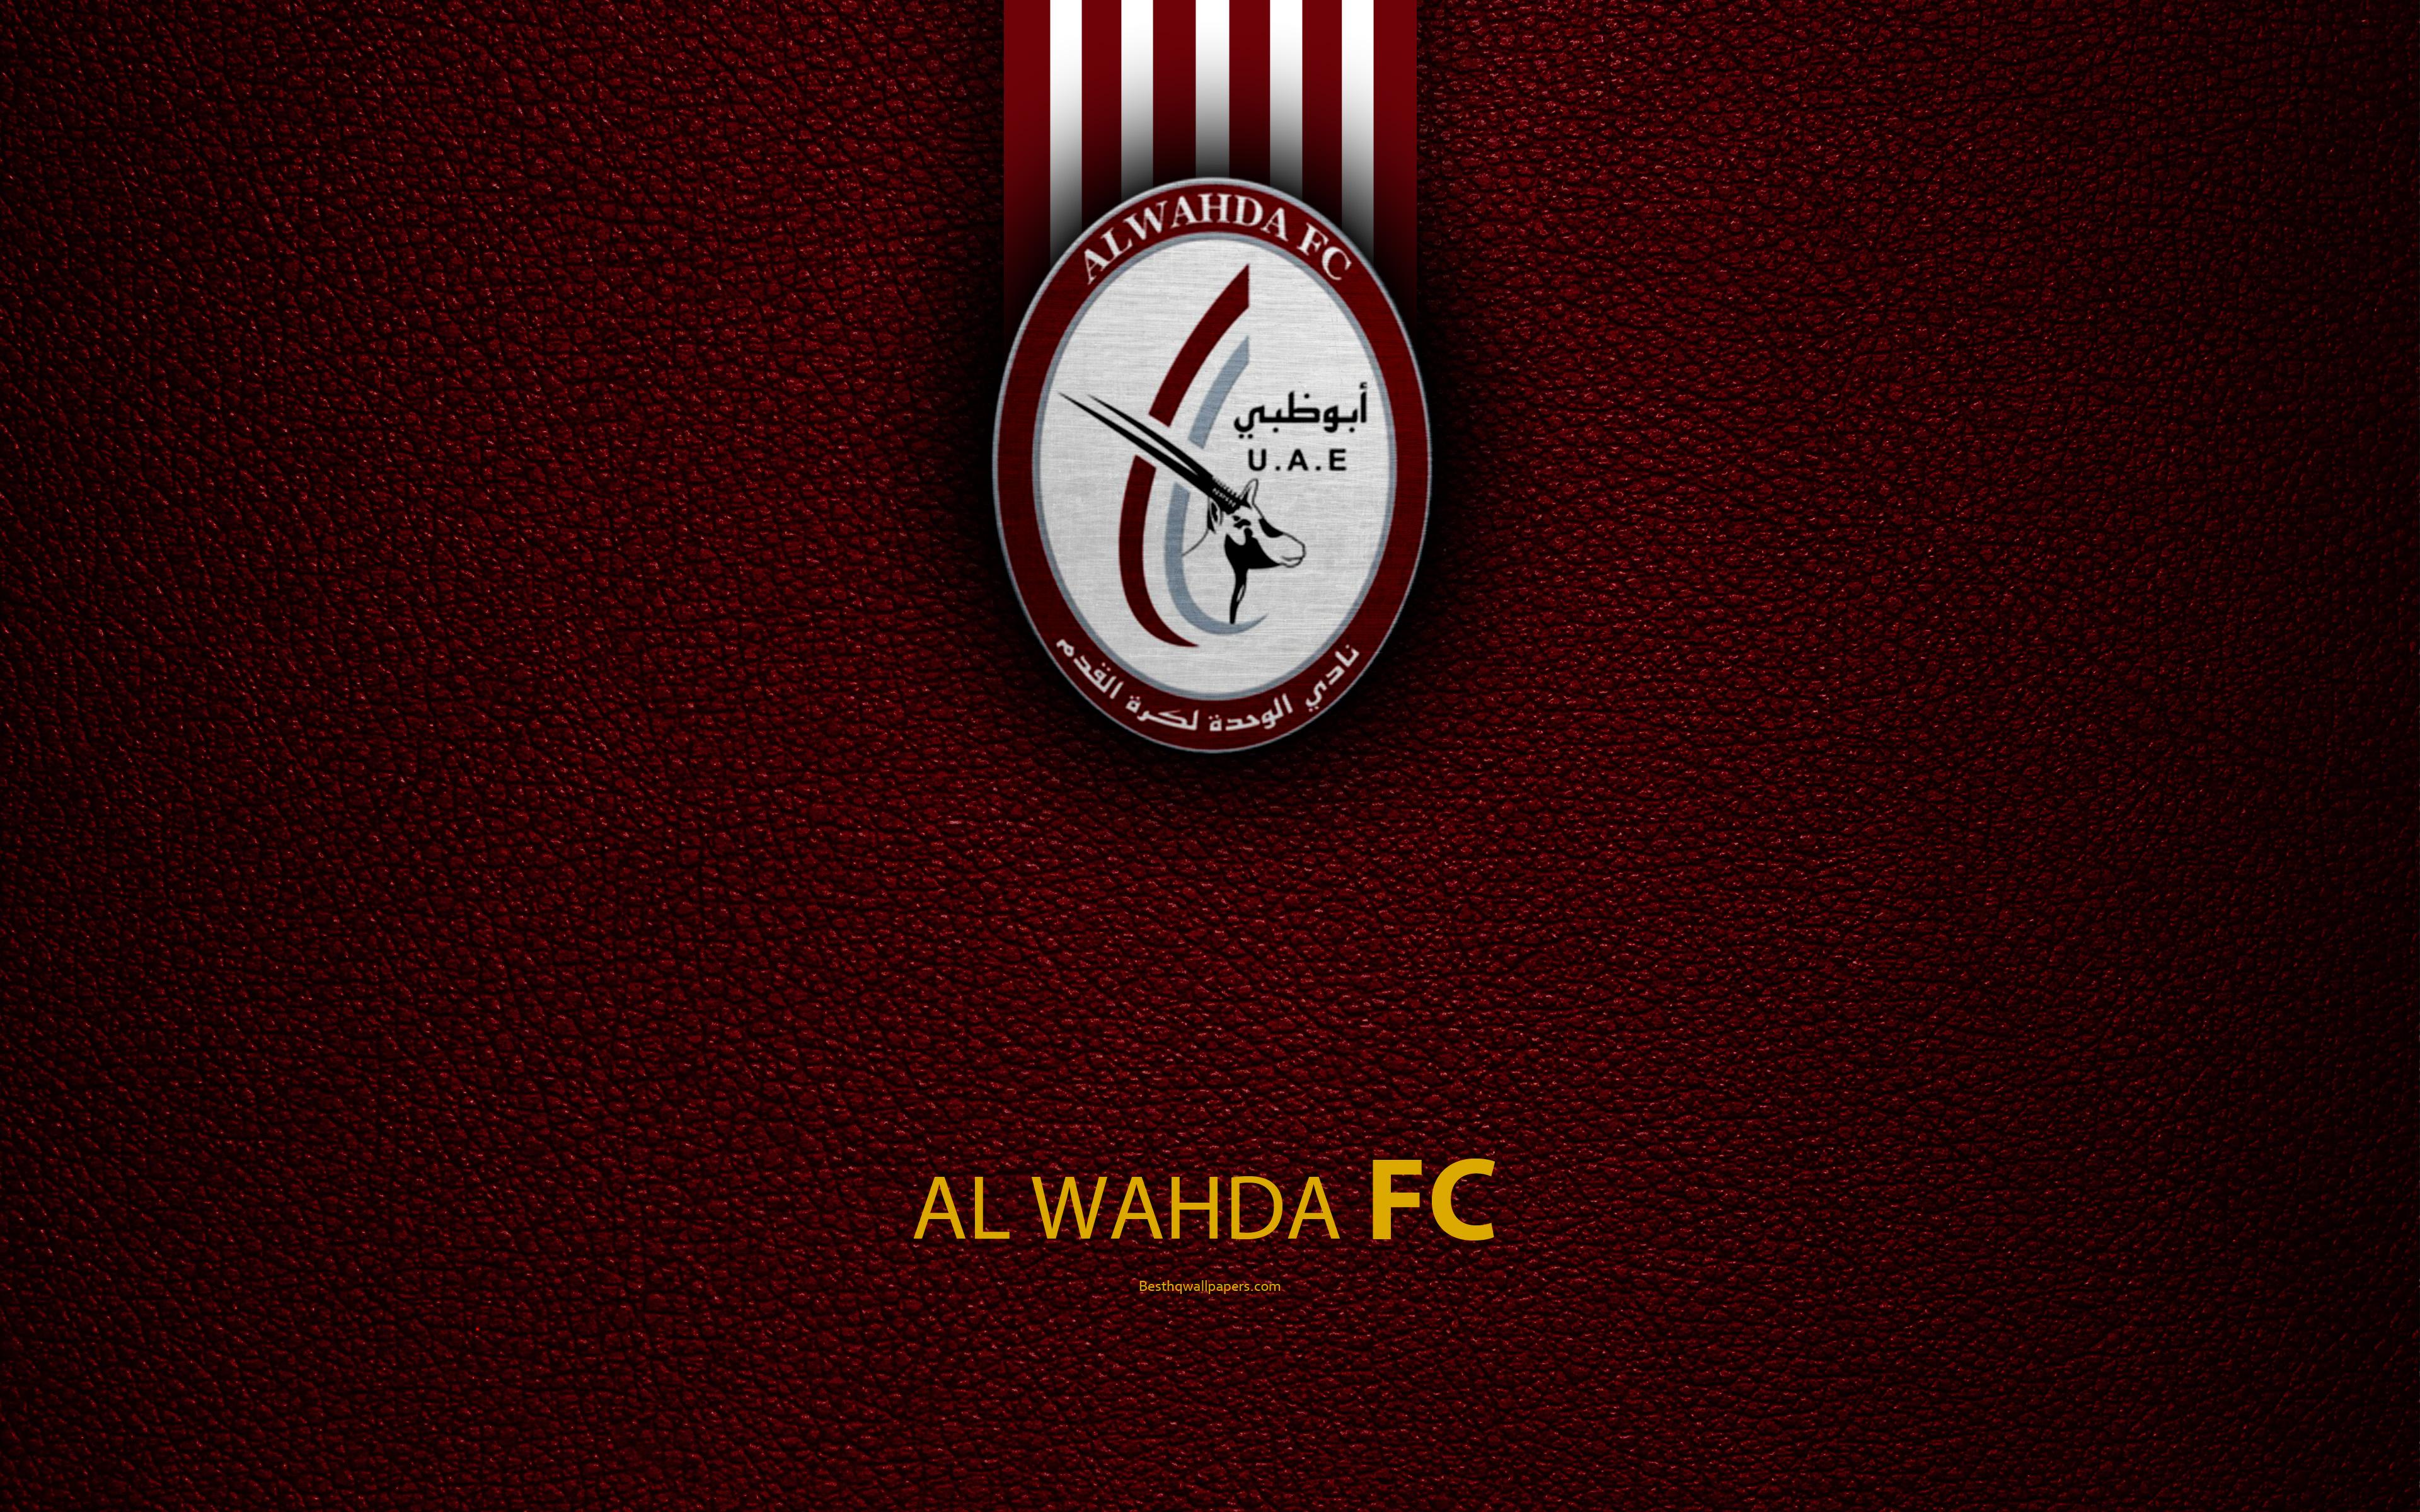 Download wallpaper Al Wahda FC, 4K, logo, football club, leather